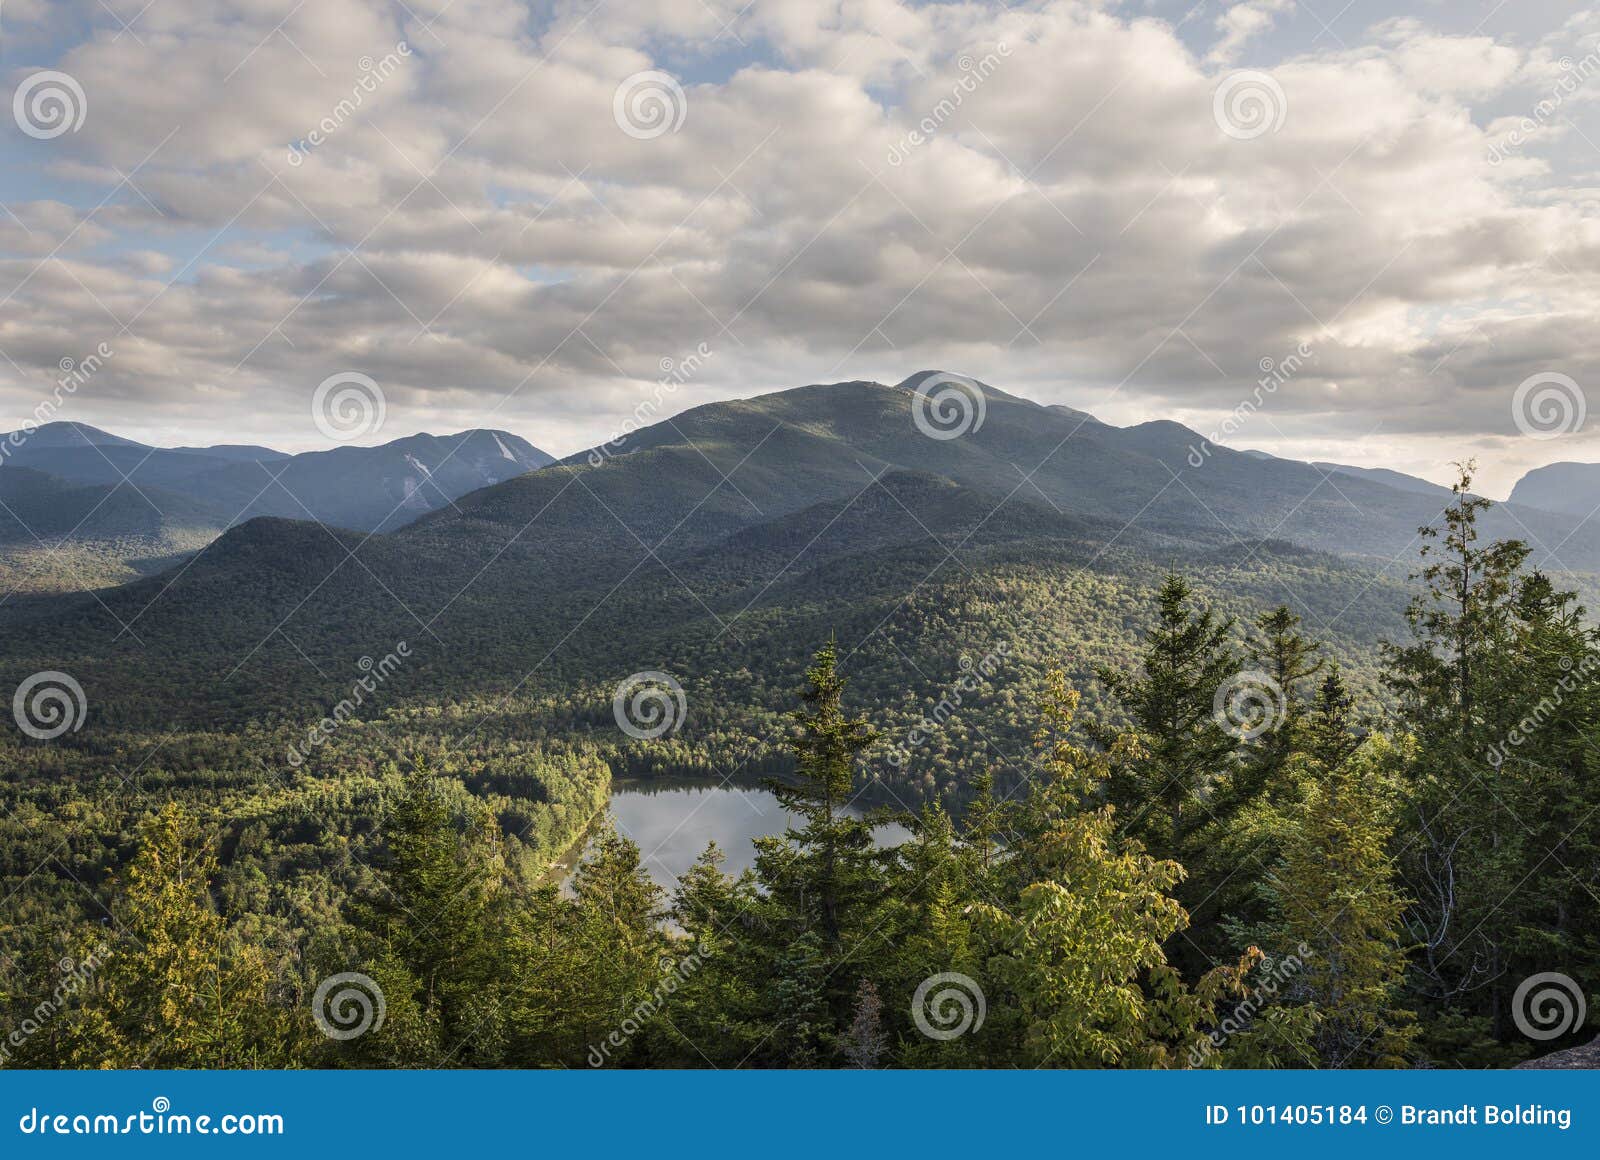 adirondack mountains and heart lake